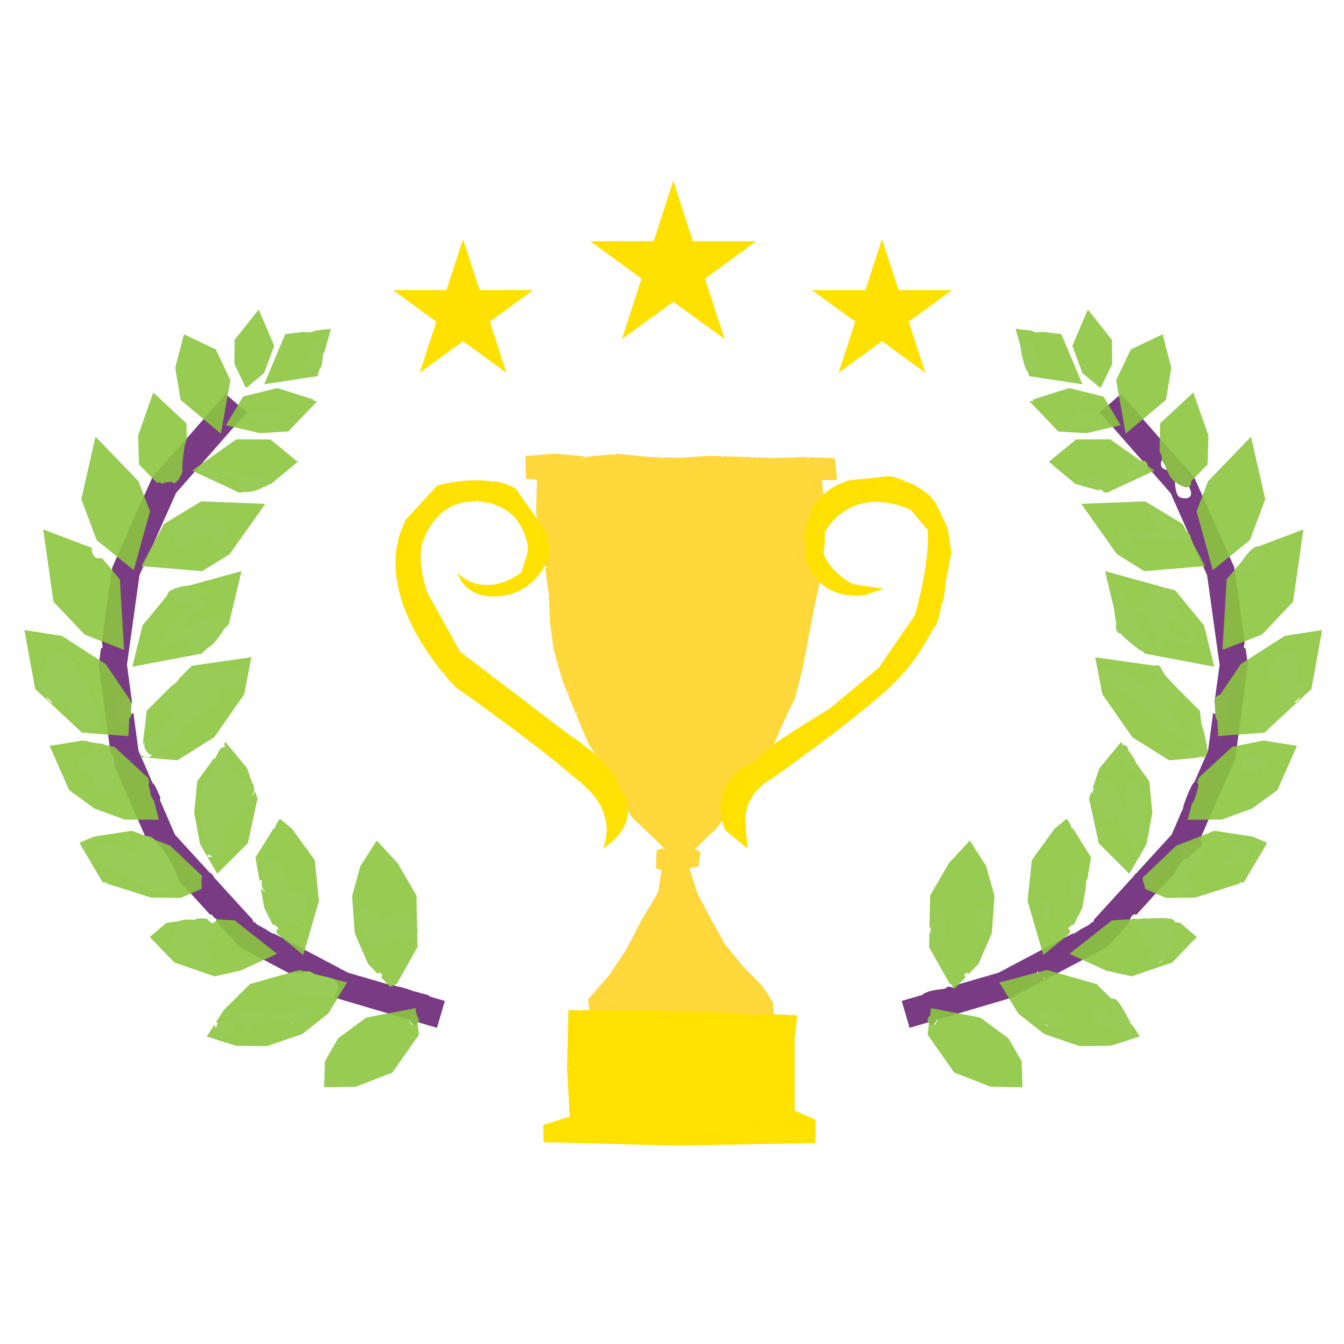 Image of an award cup